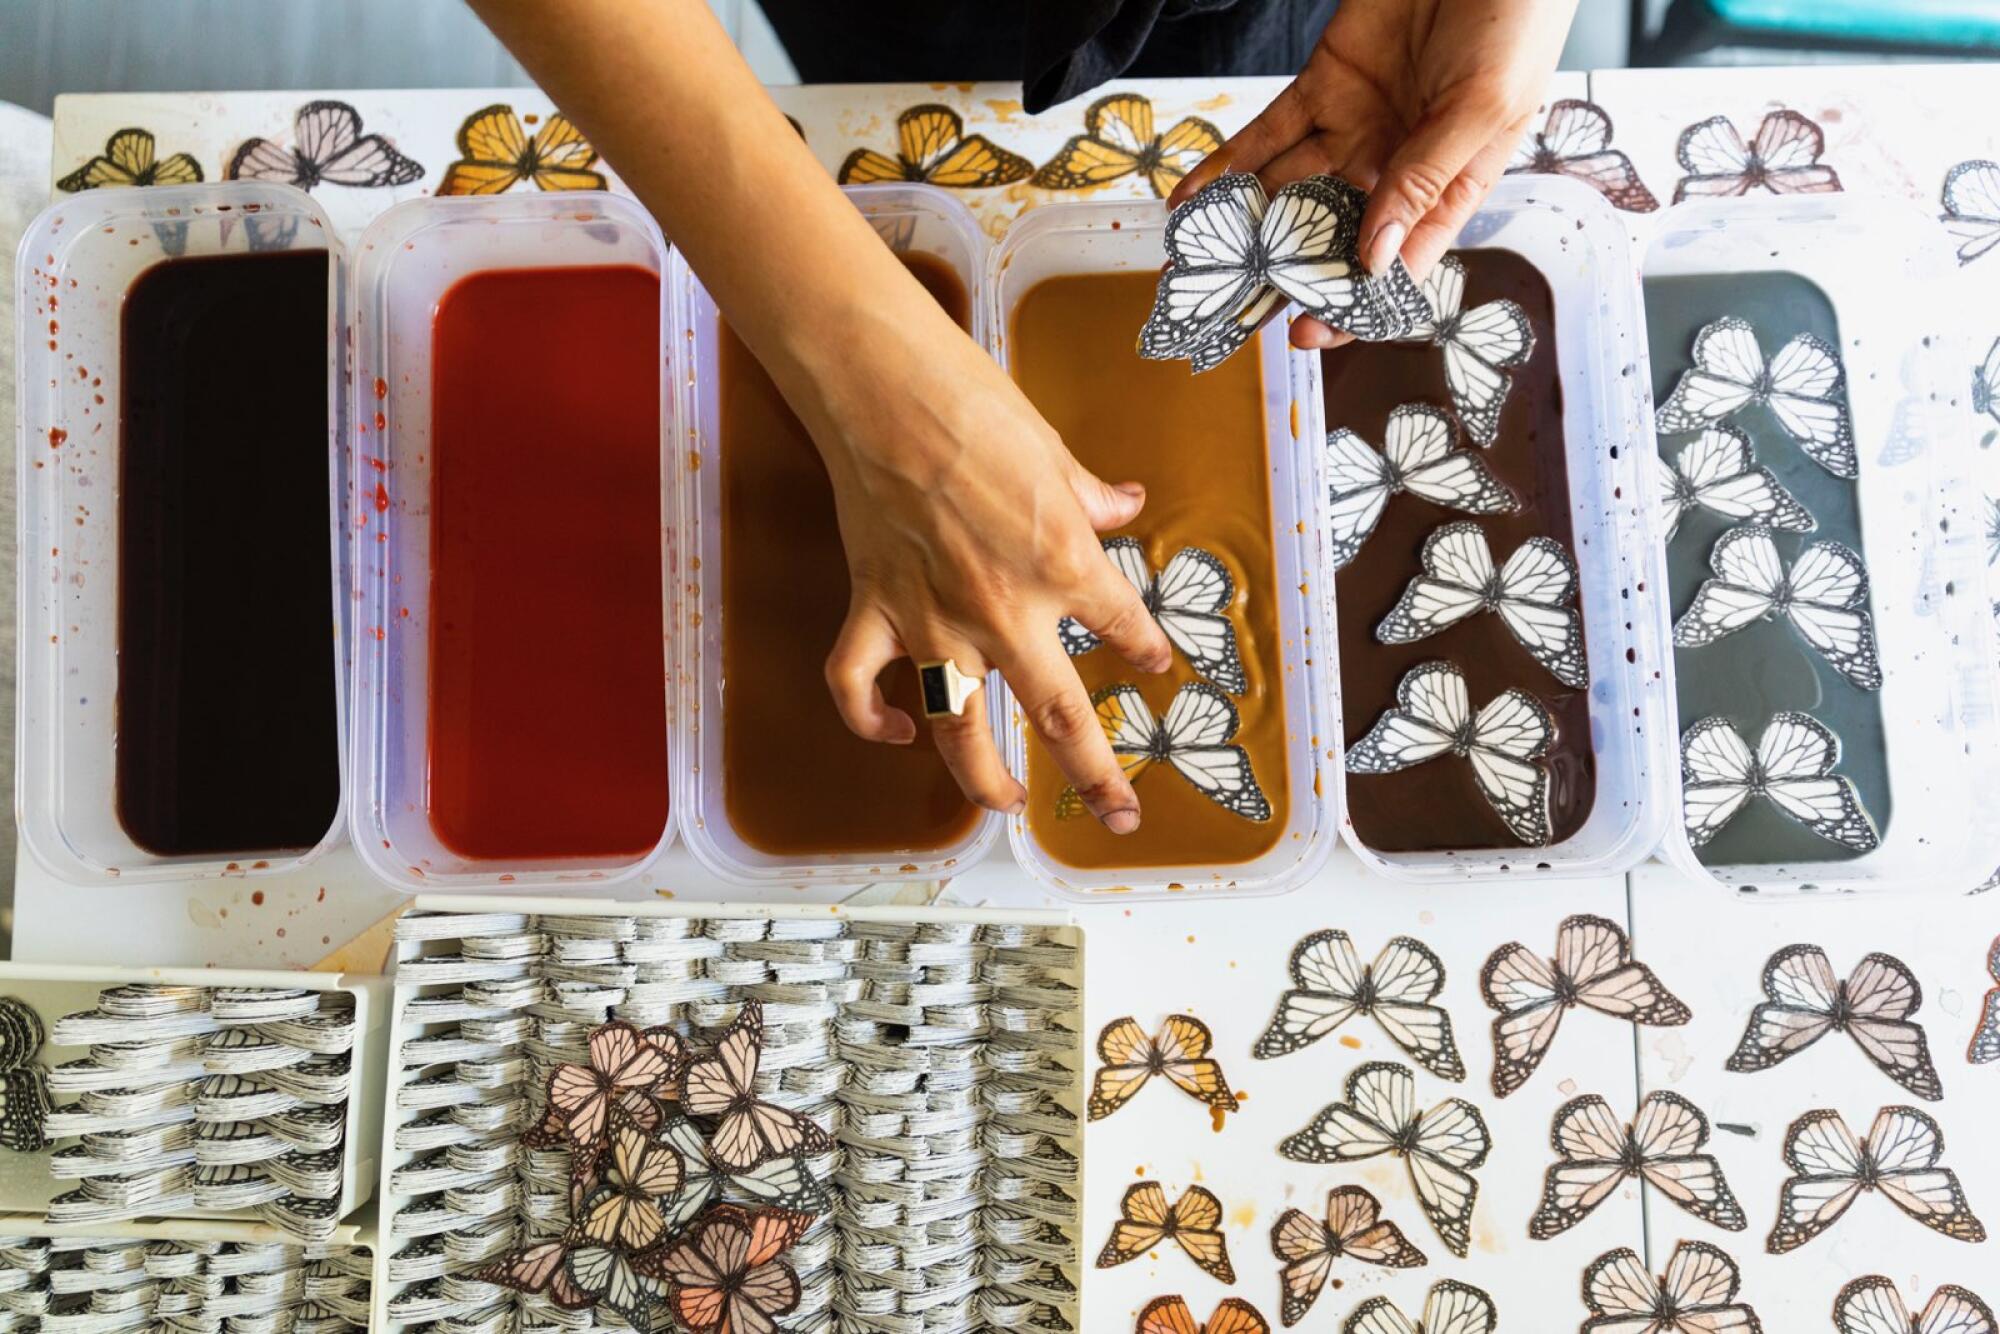 Cambrón uses monarch butterflies in her work